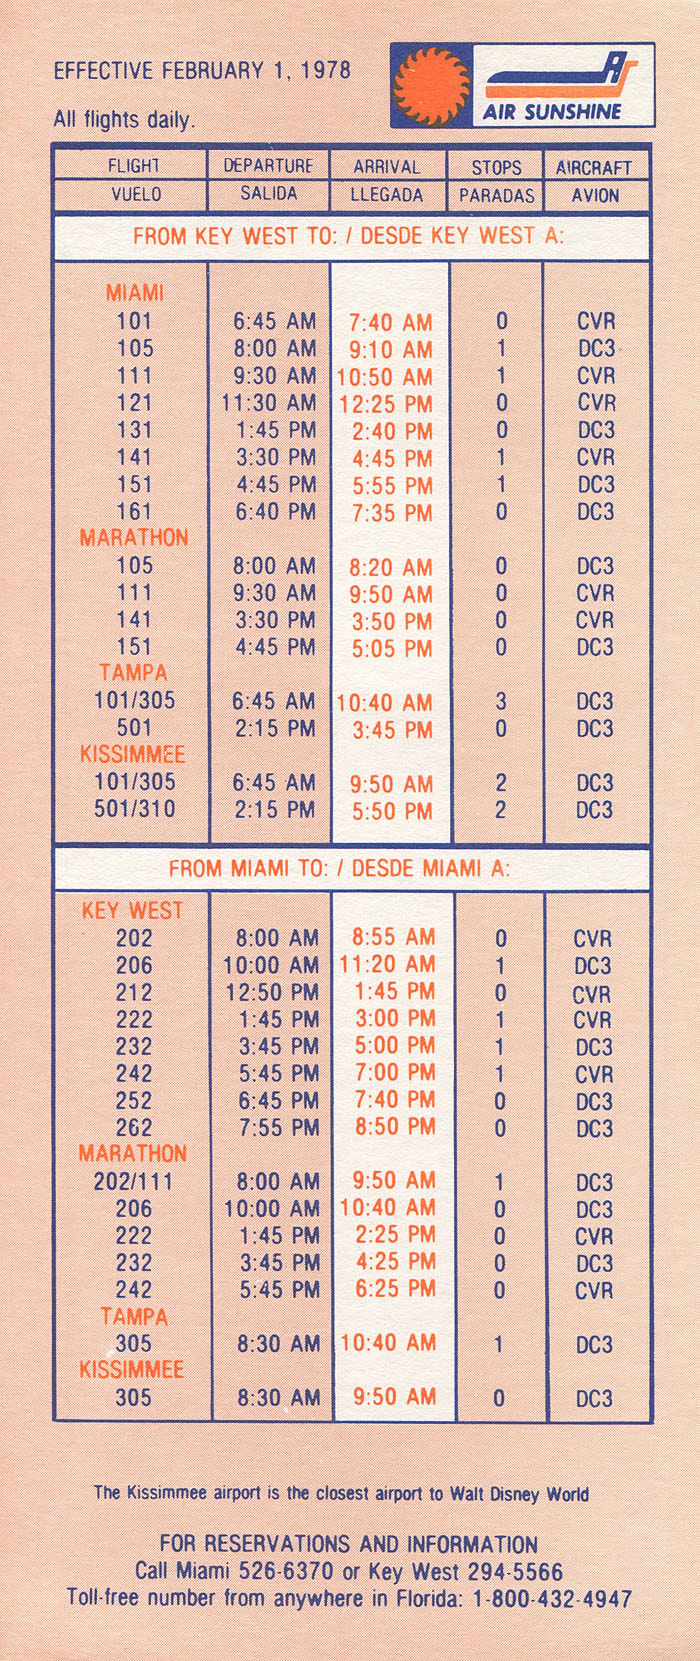 Air Sunshine timetable 1978